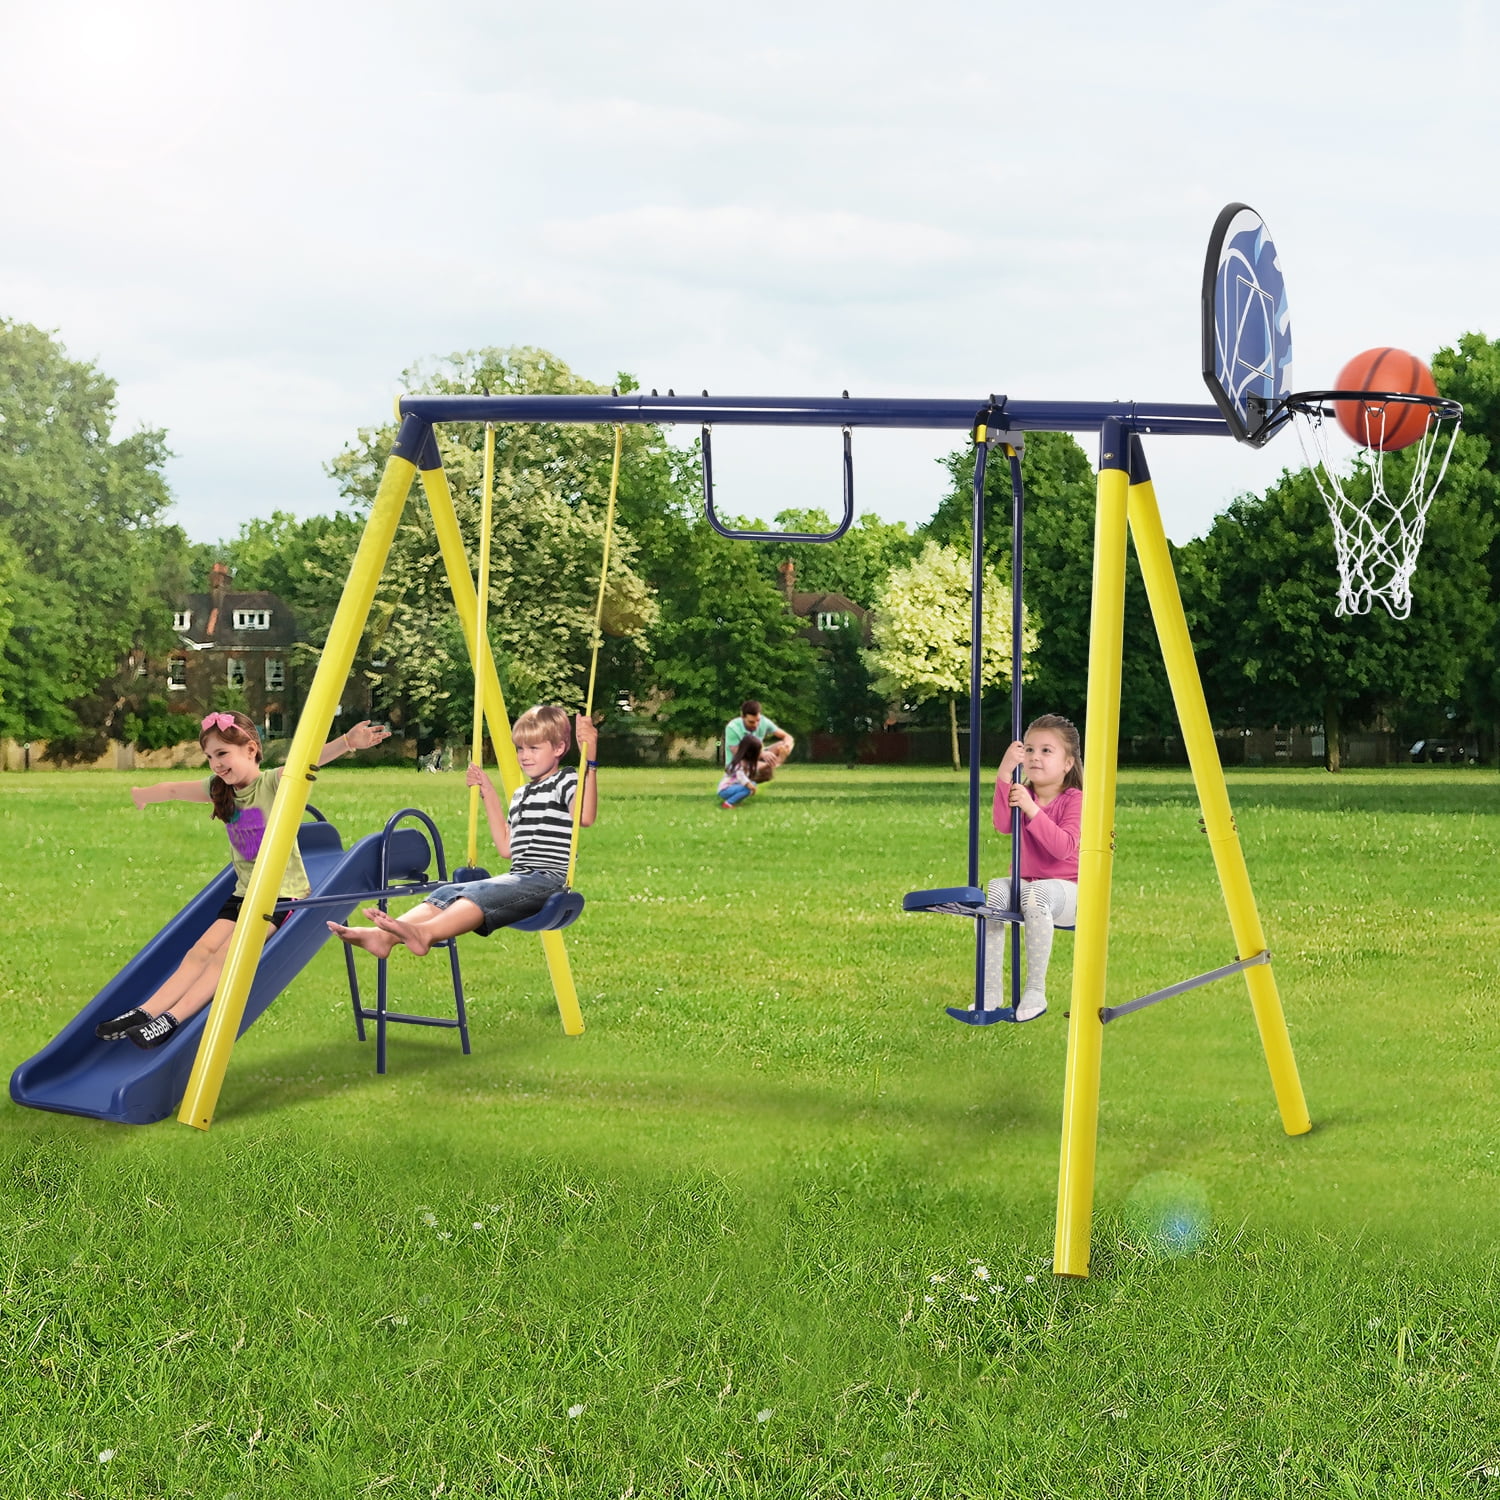 Kids Childrens Outdoor Garden Swing And Seesaw Set Playground Fun Toy Activity 